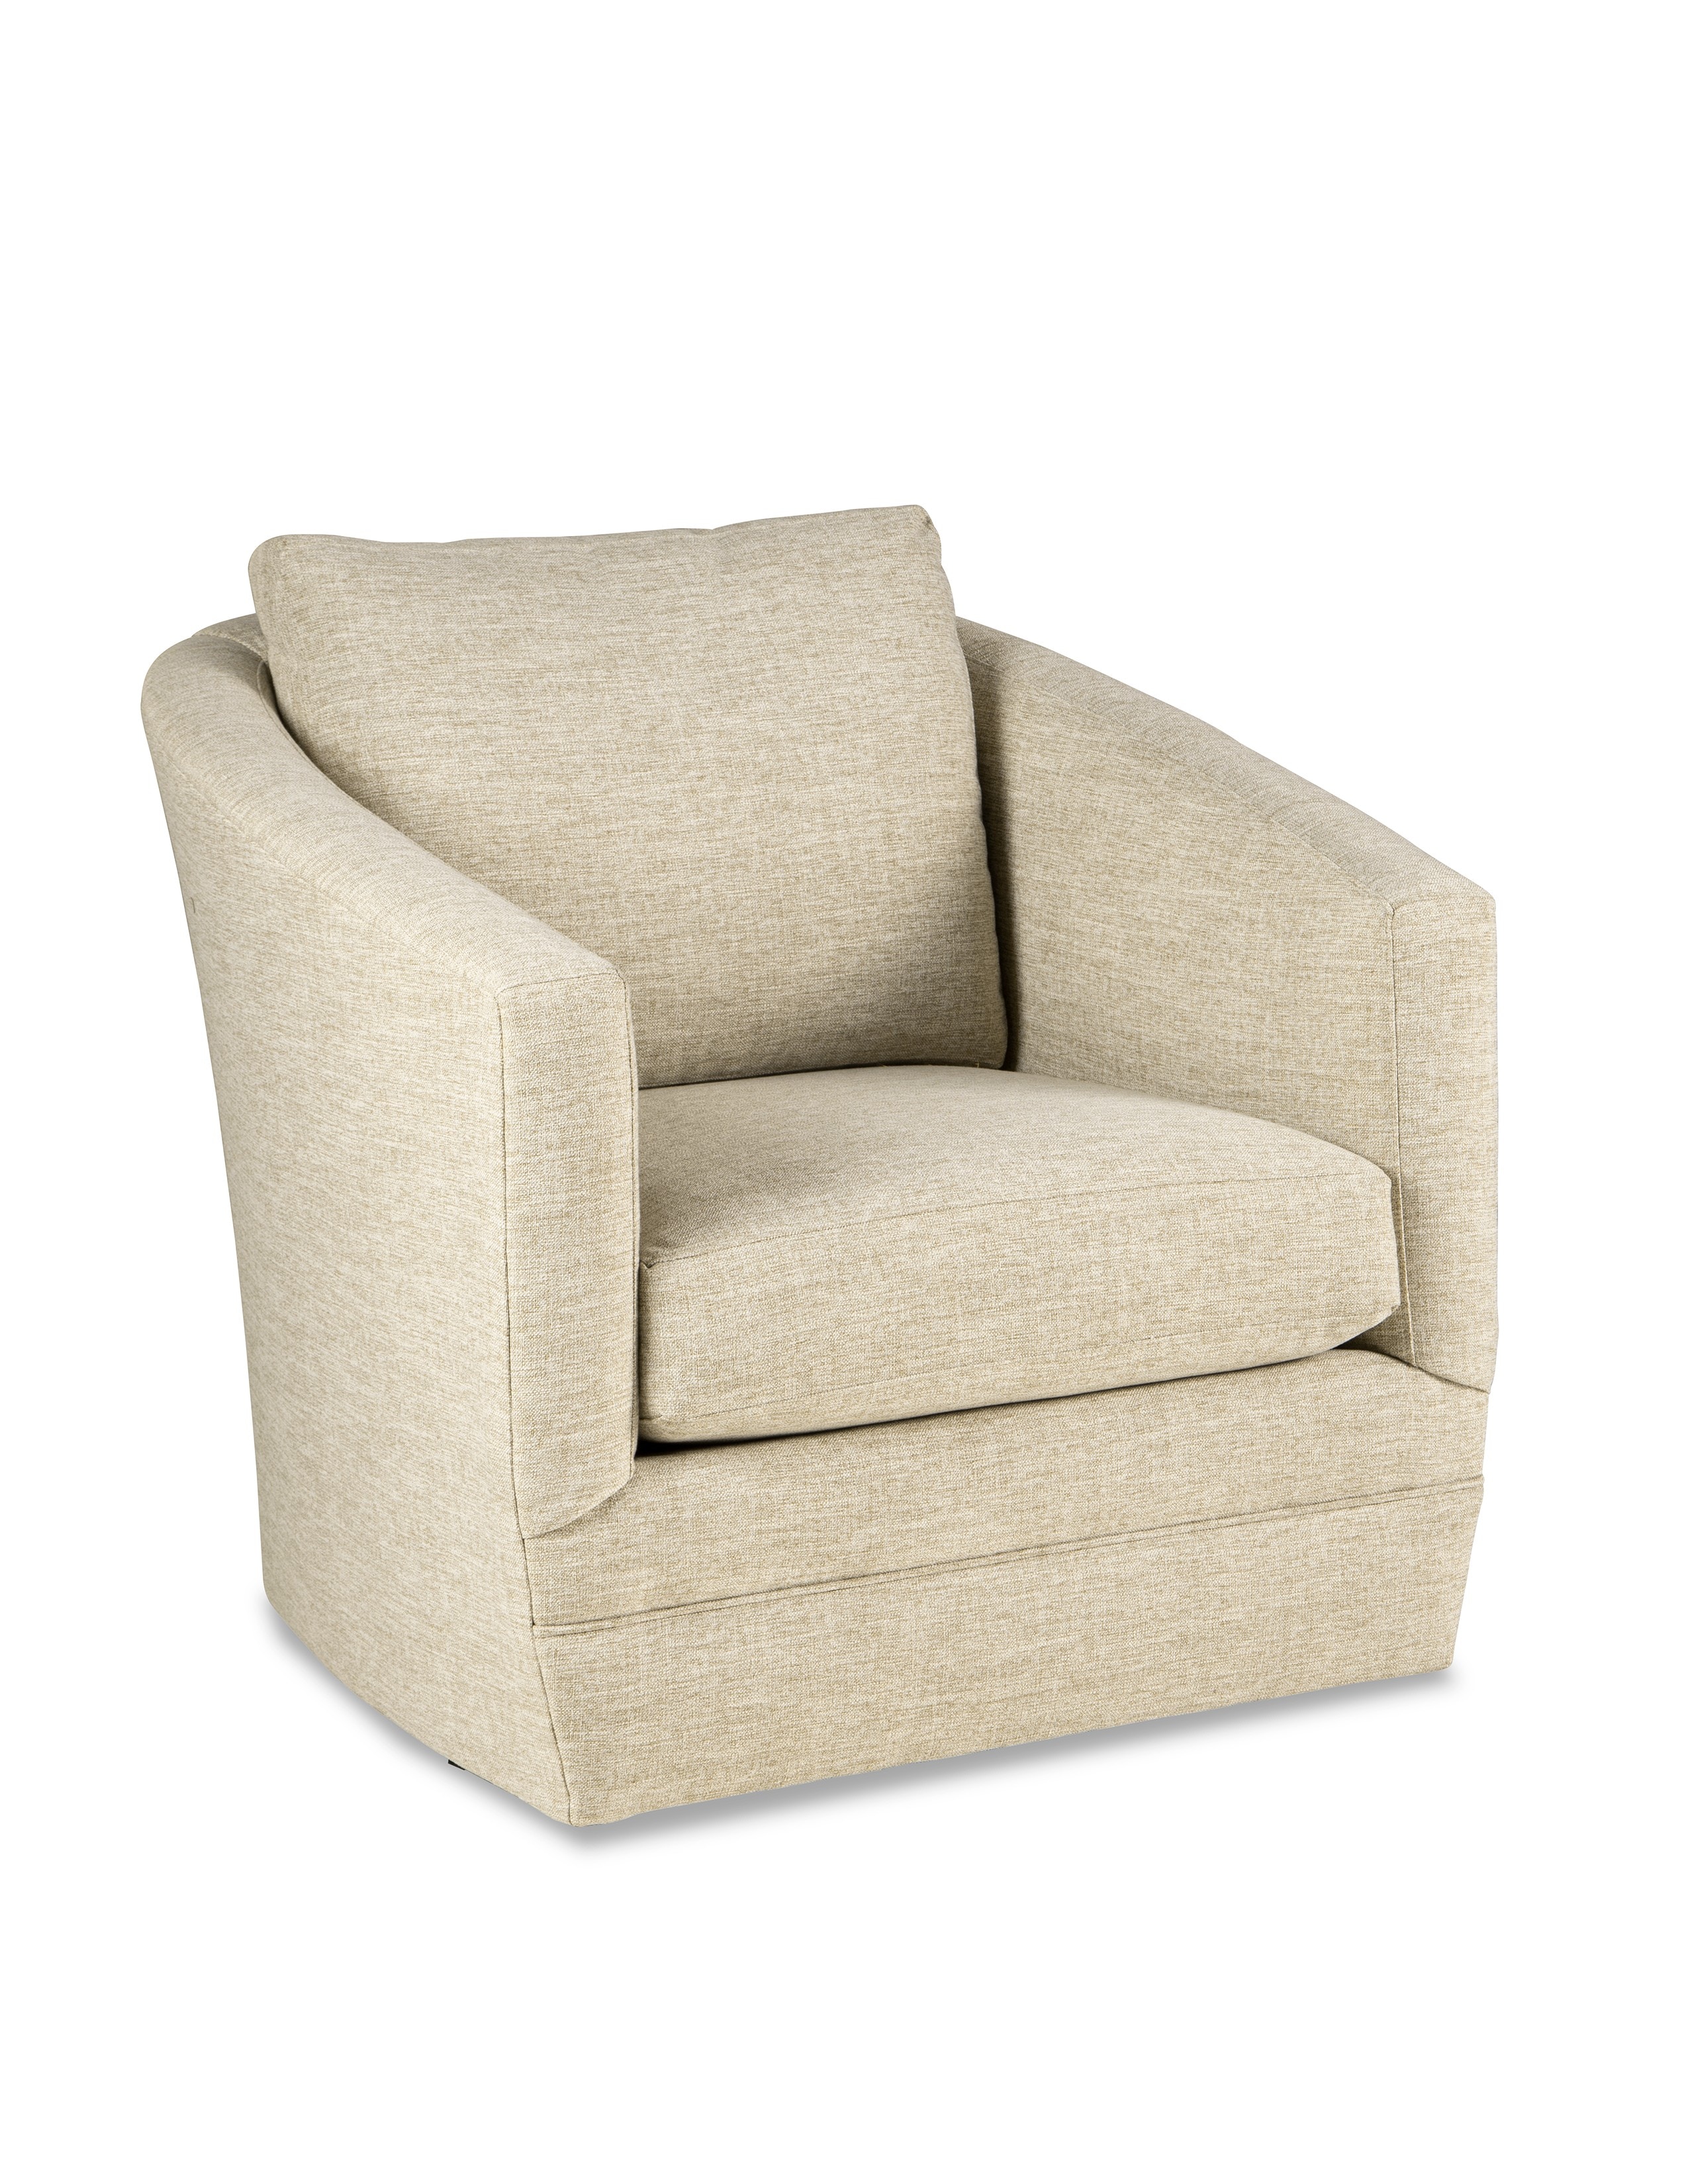 comfy swivel chair living room